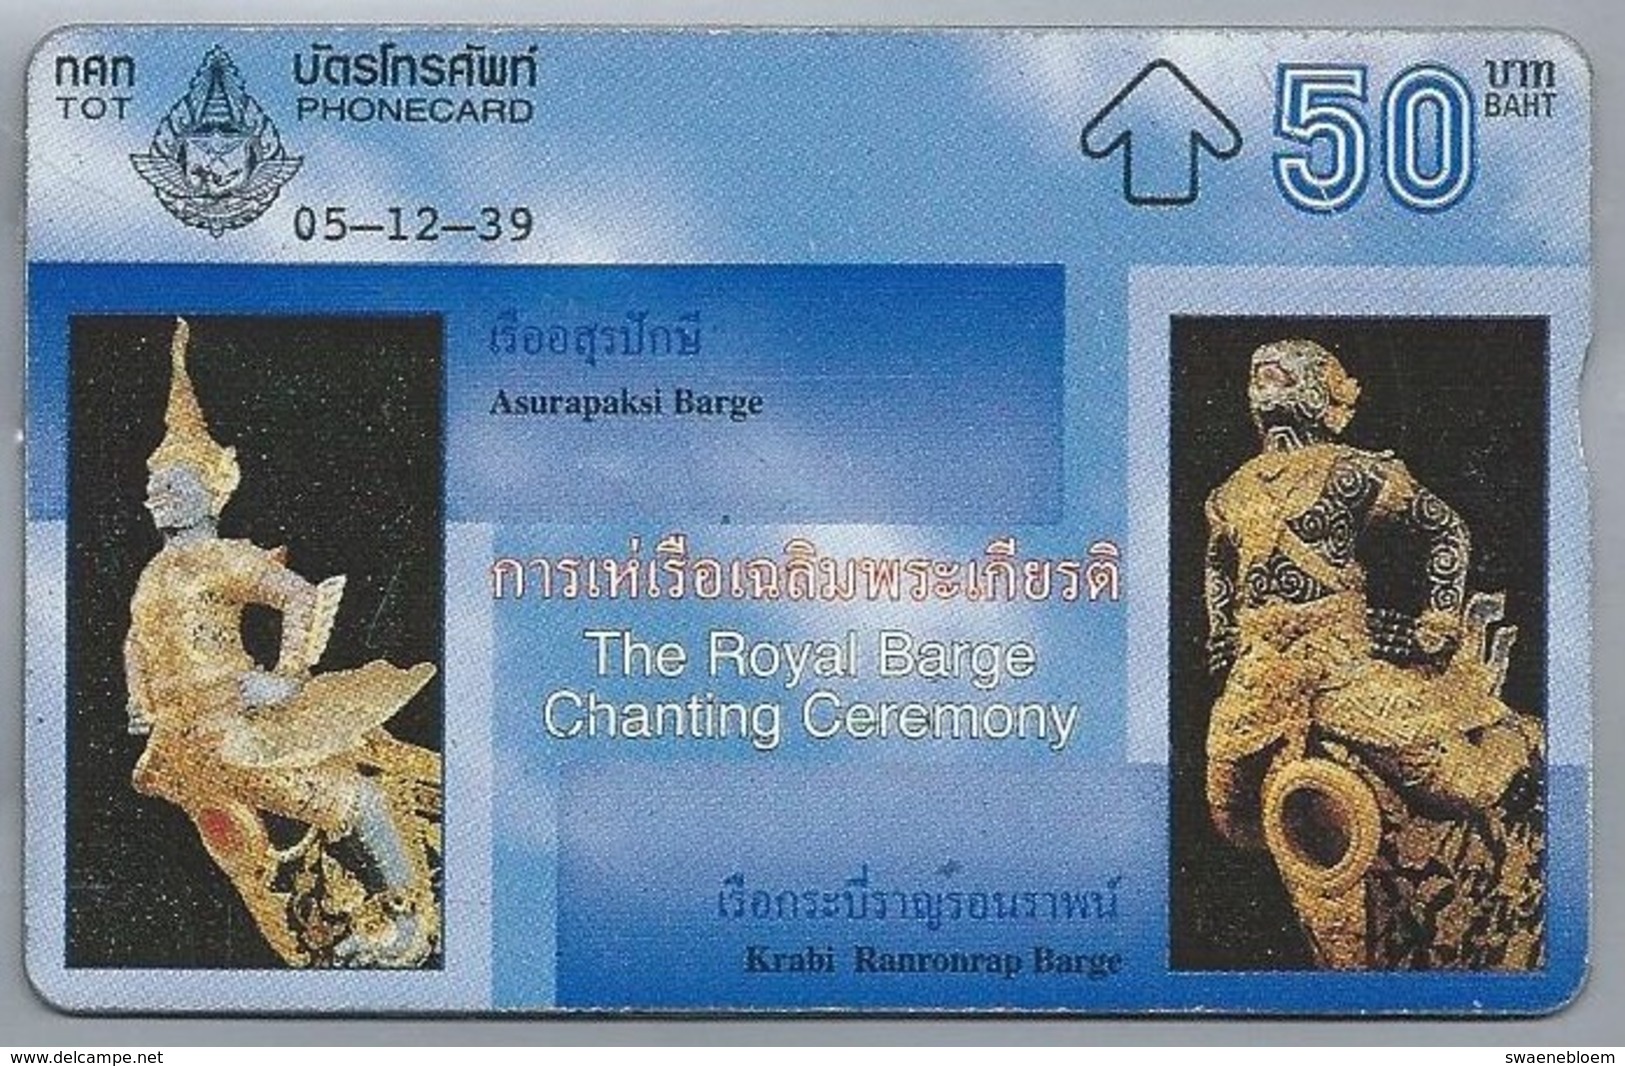 TH.- THAILAND. Phonecard. Asurapaksi Barge. Krabi Ranronrap Barge.  05-12-39. The Royal Barge Chanting Ceremony. 2 Scans - Thaïlande